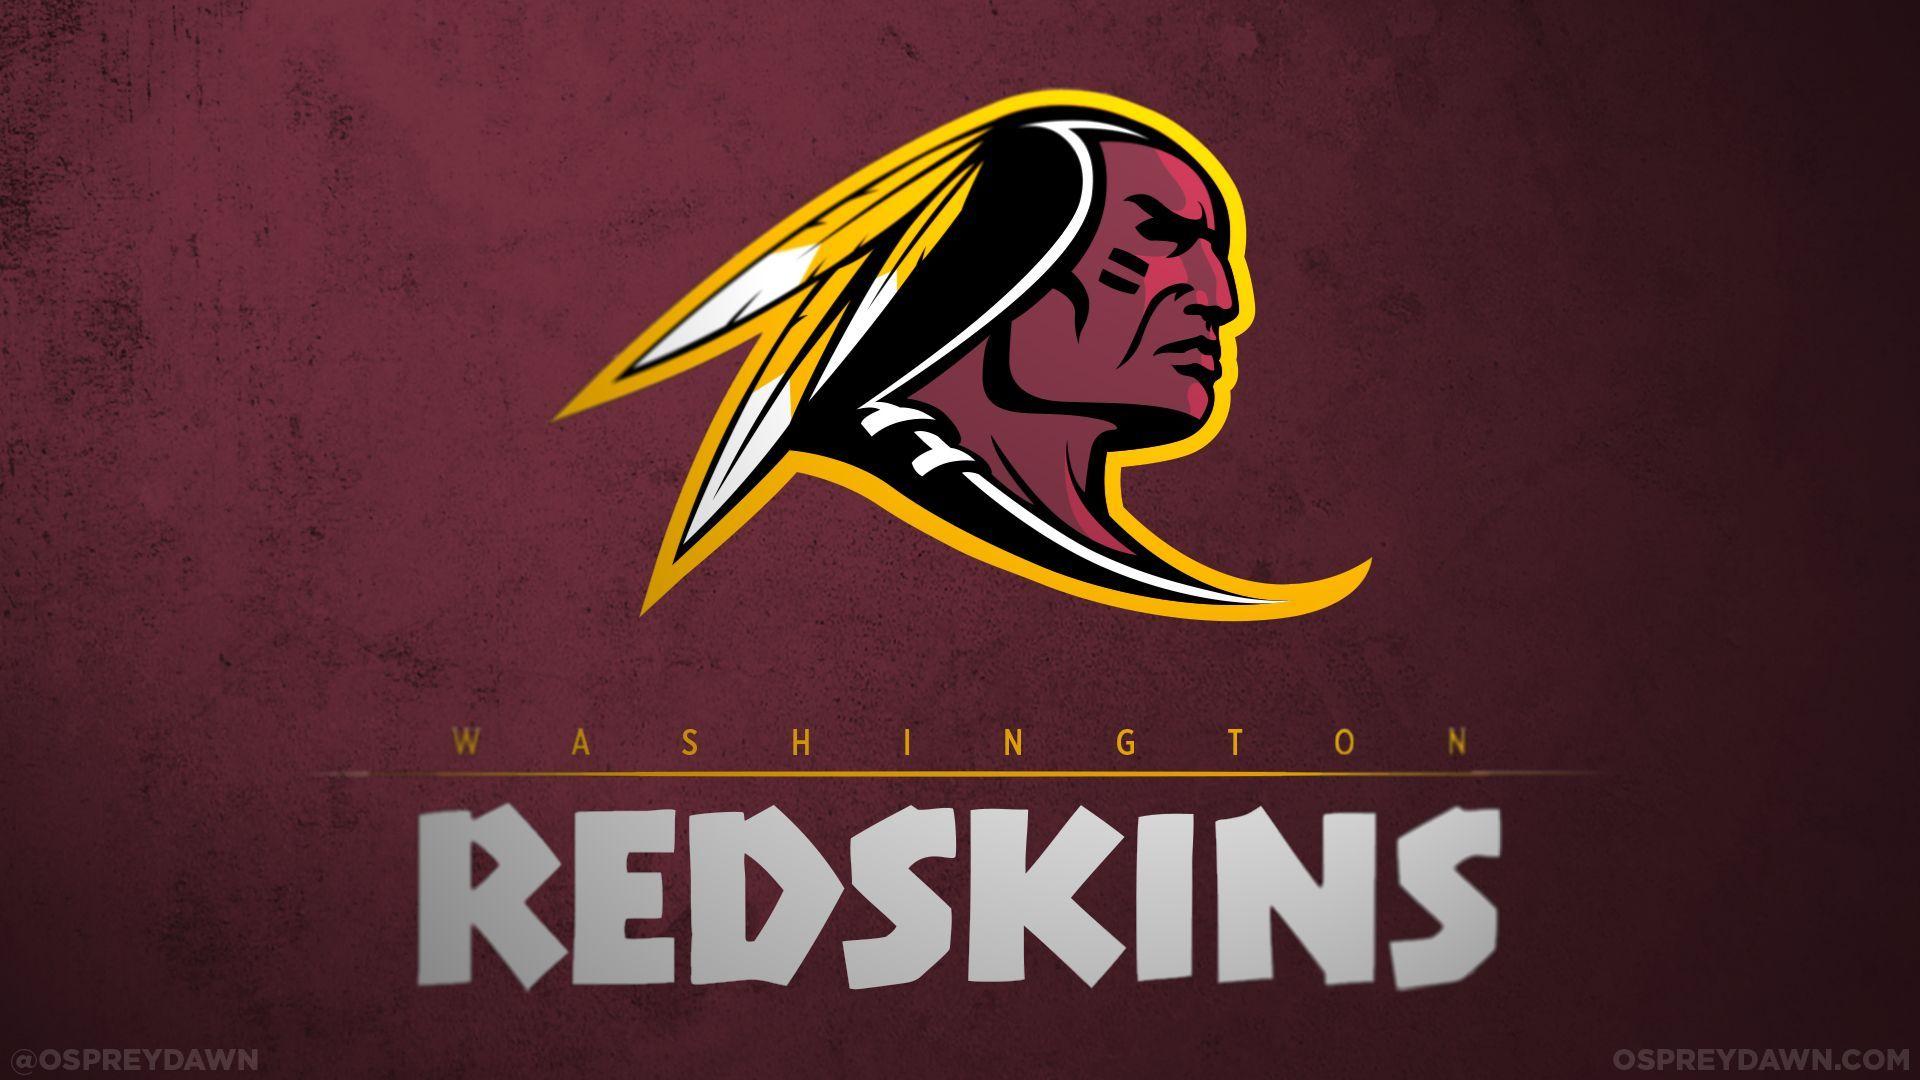 Washington Redskins Logo Change. Washington Redskins Name Change